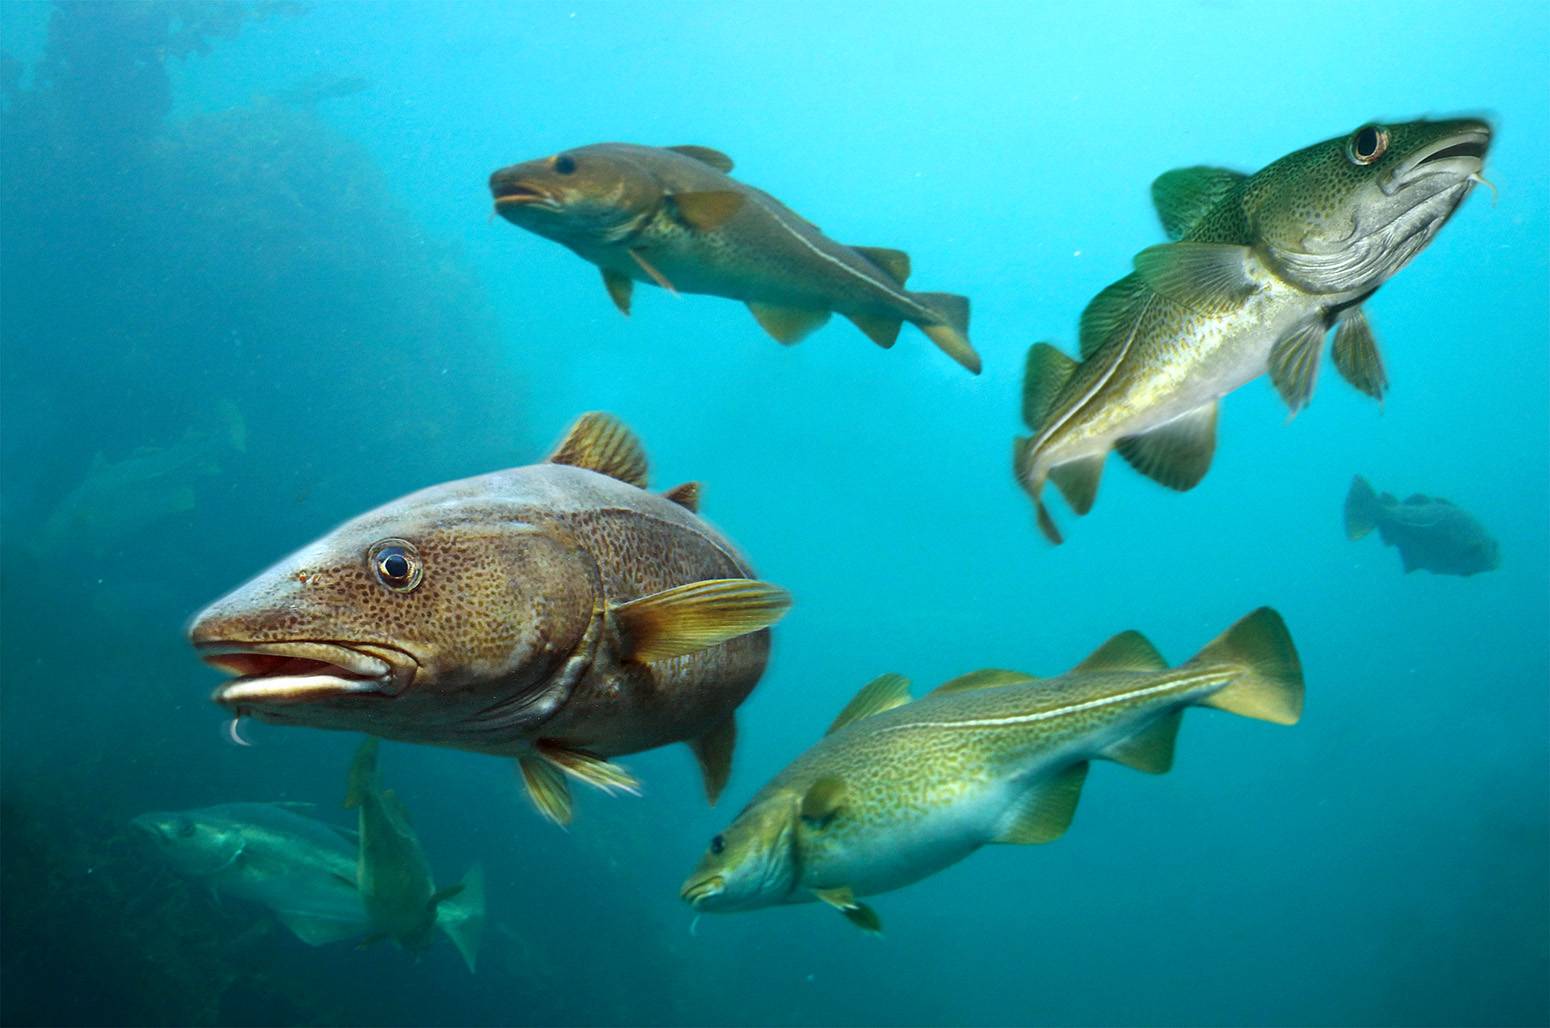 Семейство тресковых рыб с описанием и фото